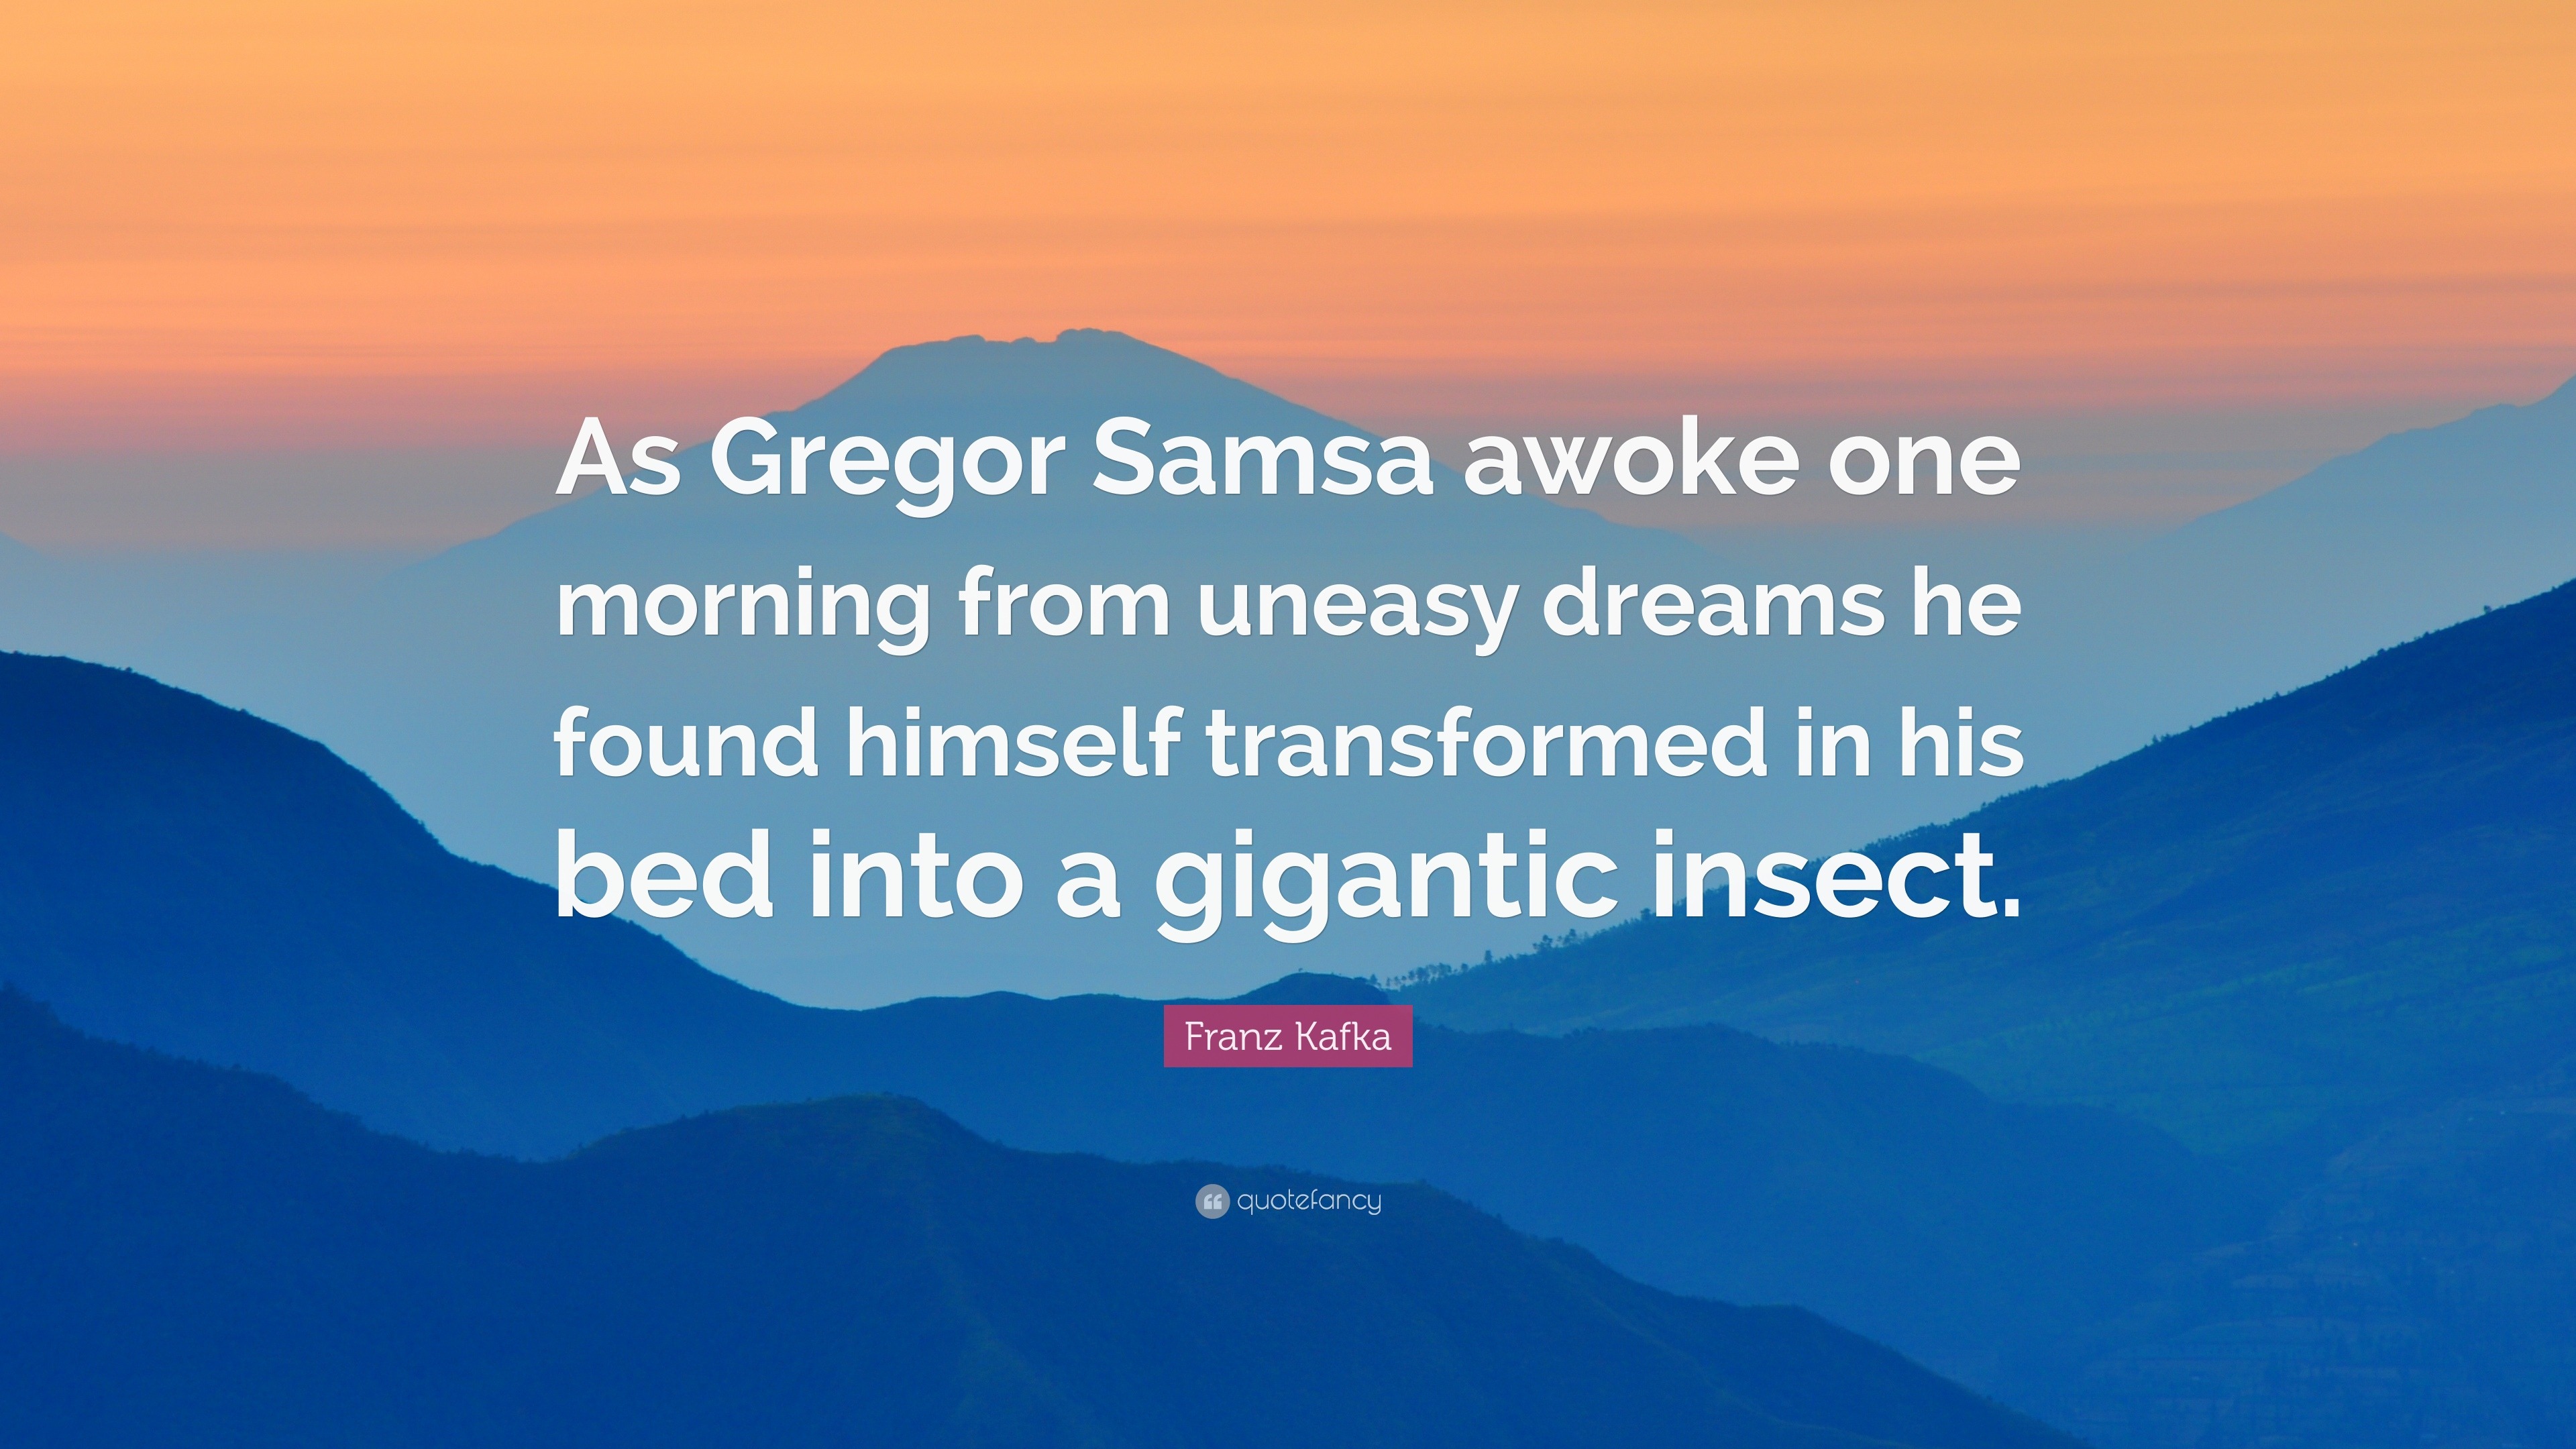 Why does Gregor Samsa turn into a bug?